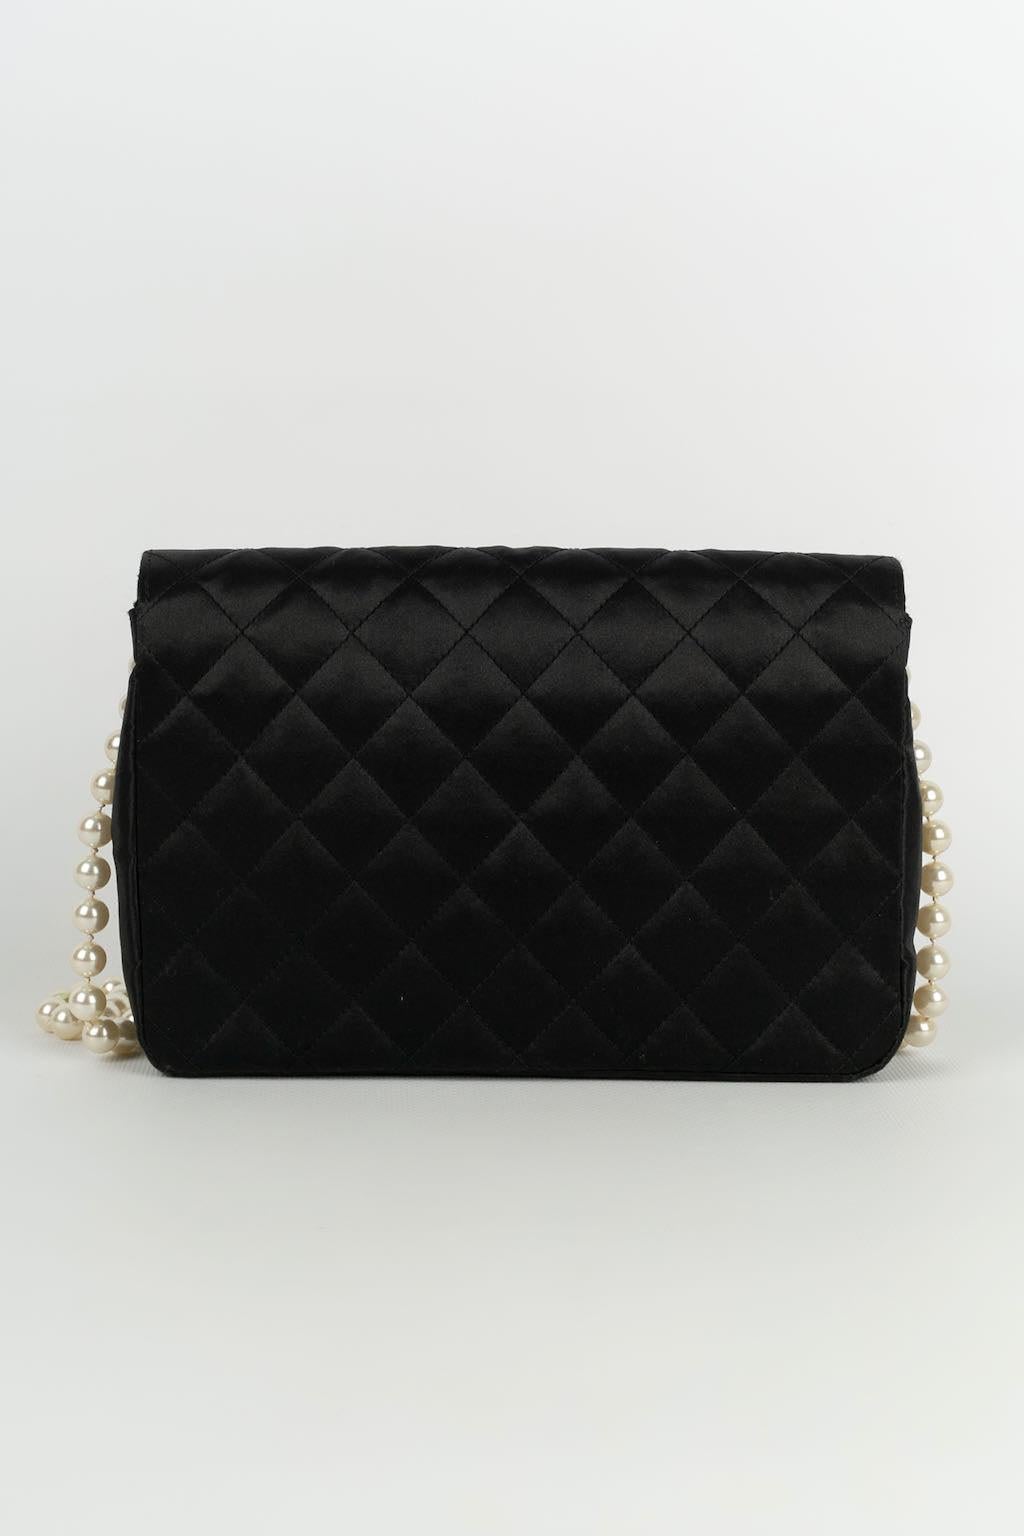 Chanel Jewel Evening Black Bag In Good Condition For Sale In SAINT-OUEN-SUR-SEINE, FR